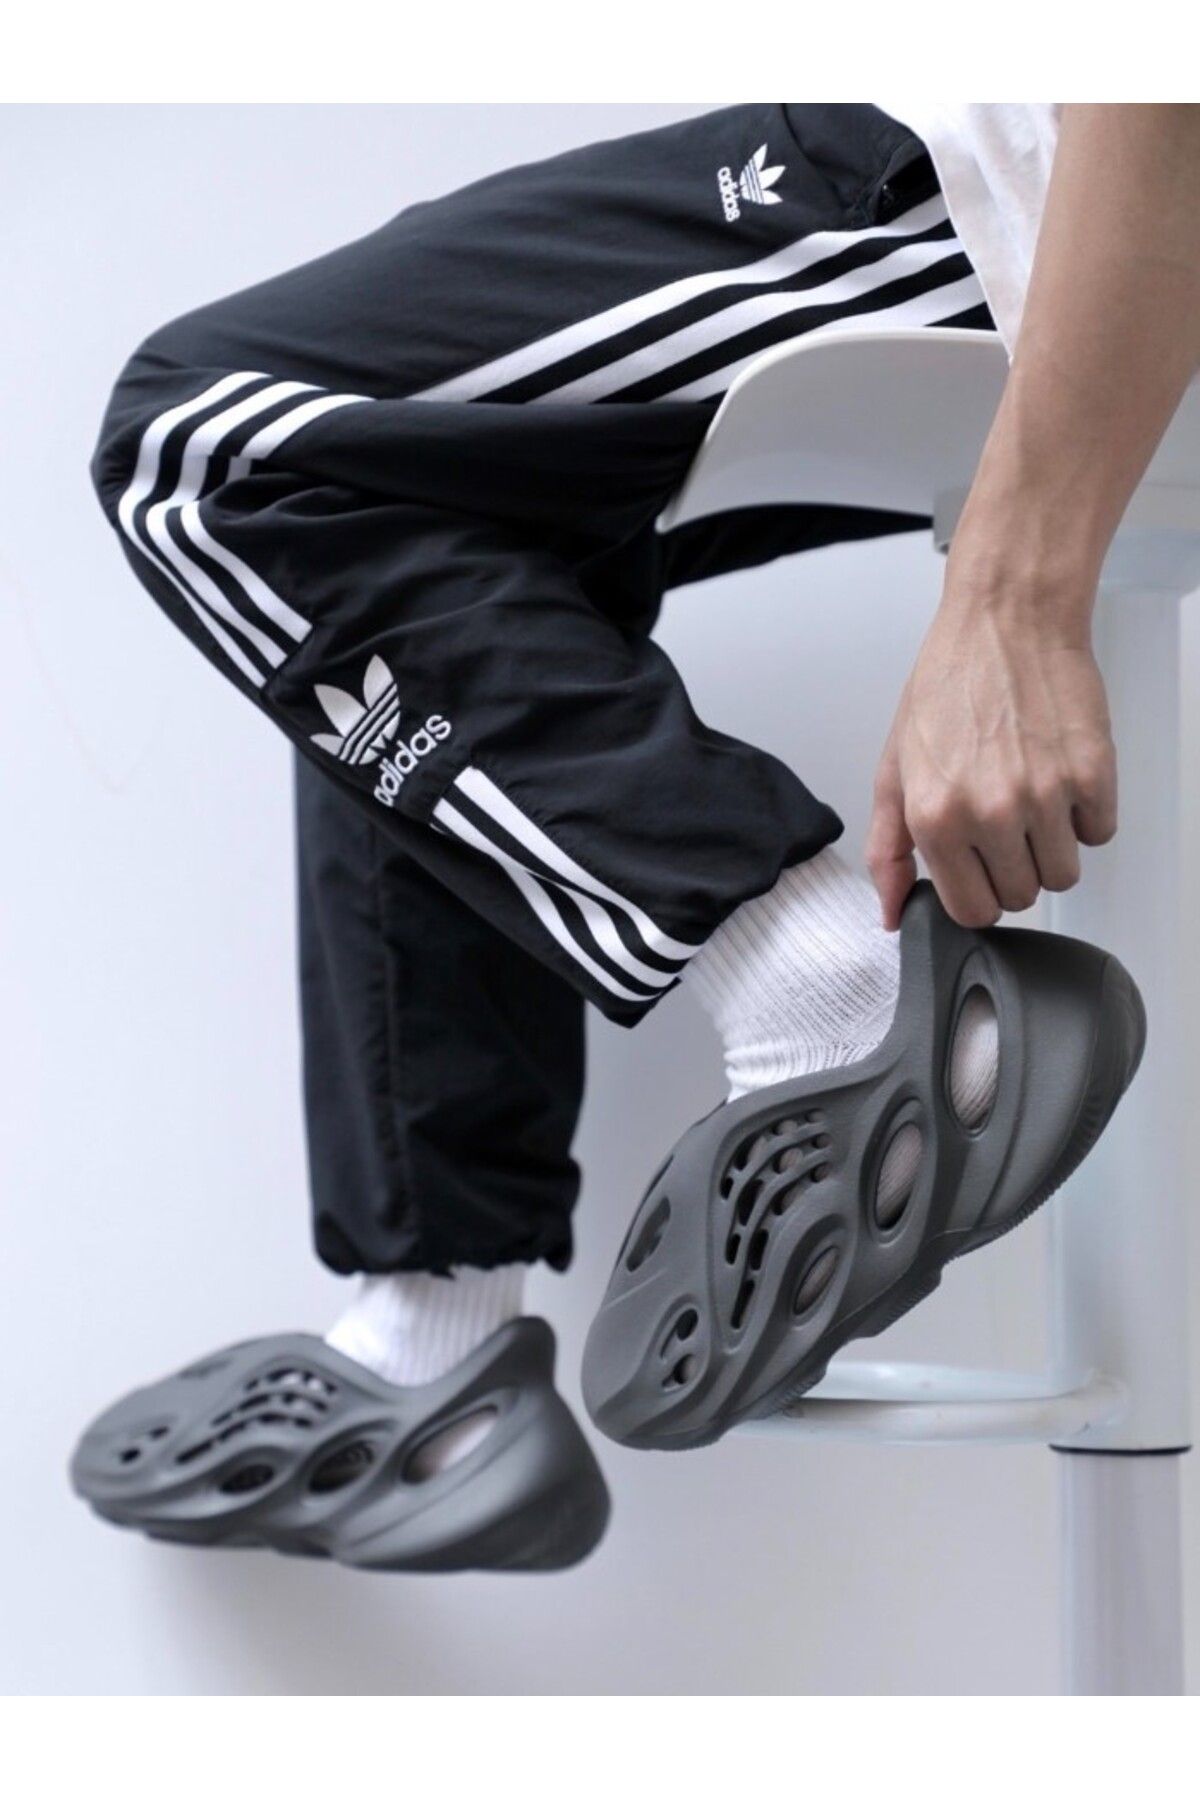 adidas Yeezy Foam Runner "Carbon" Sandals Erkek Günlük Spor Sandalet